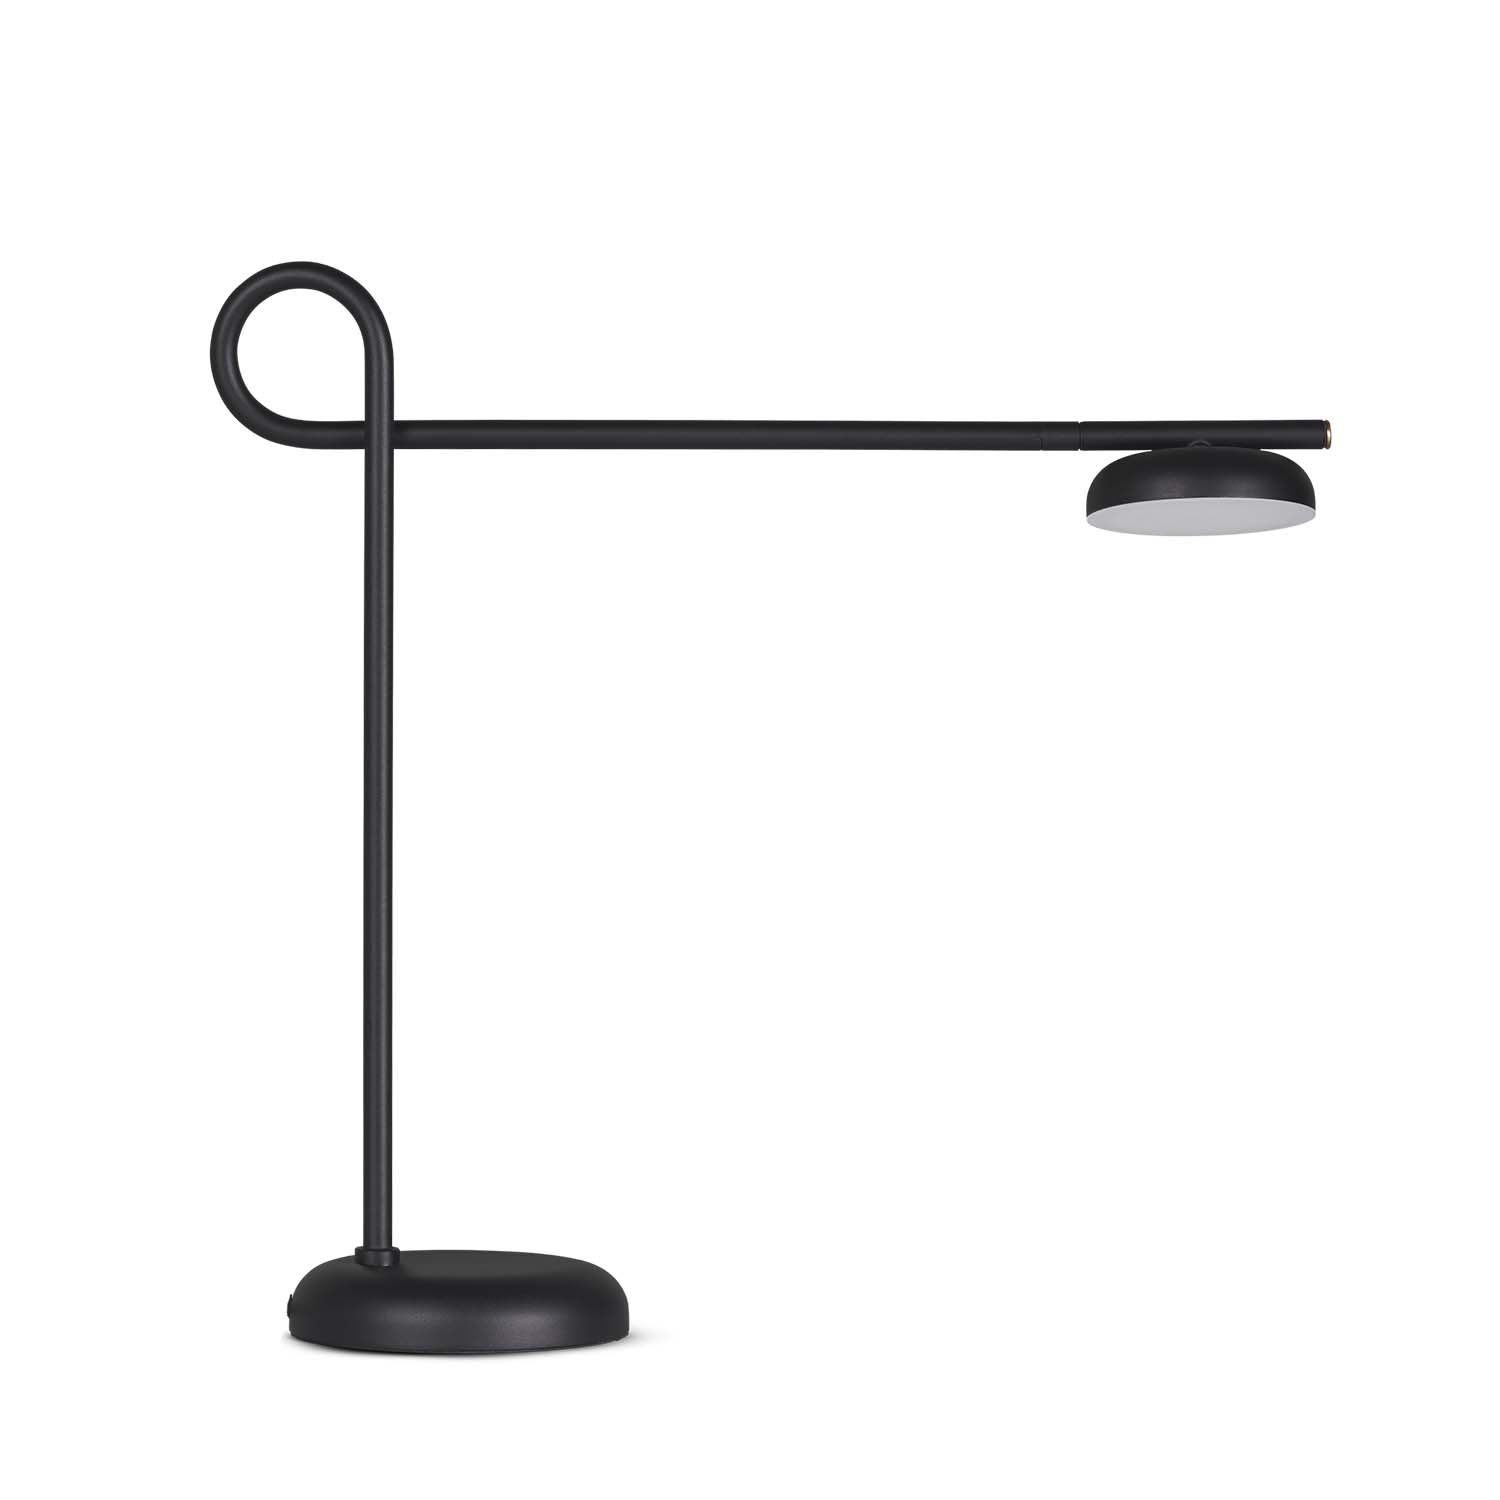 SALTO - Designer desk lamp, black or salmon dimmable